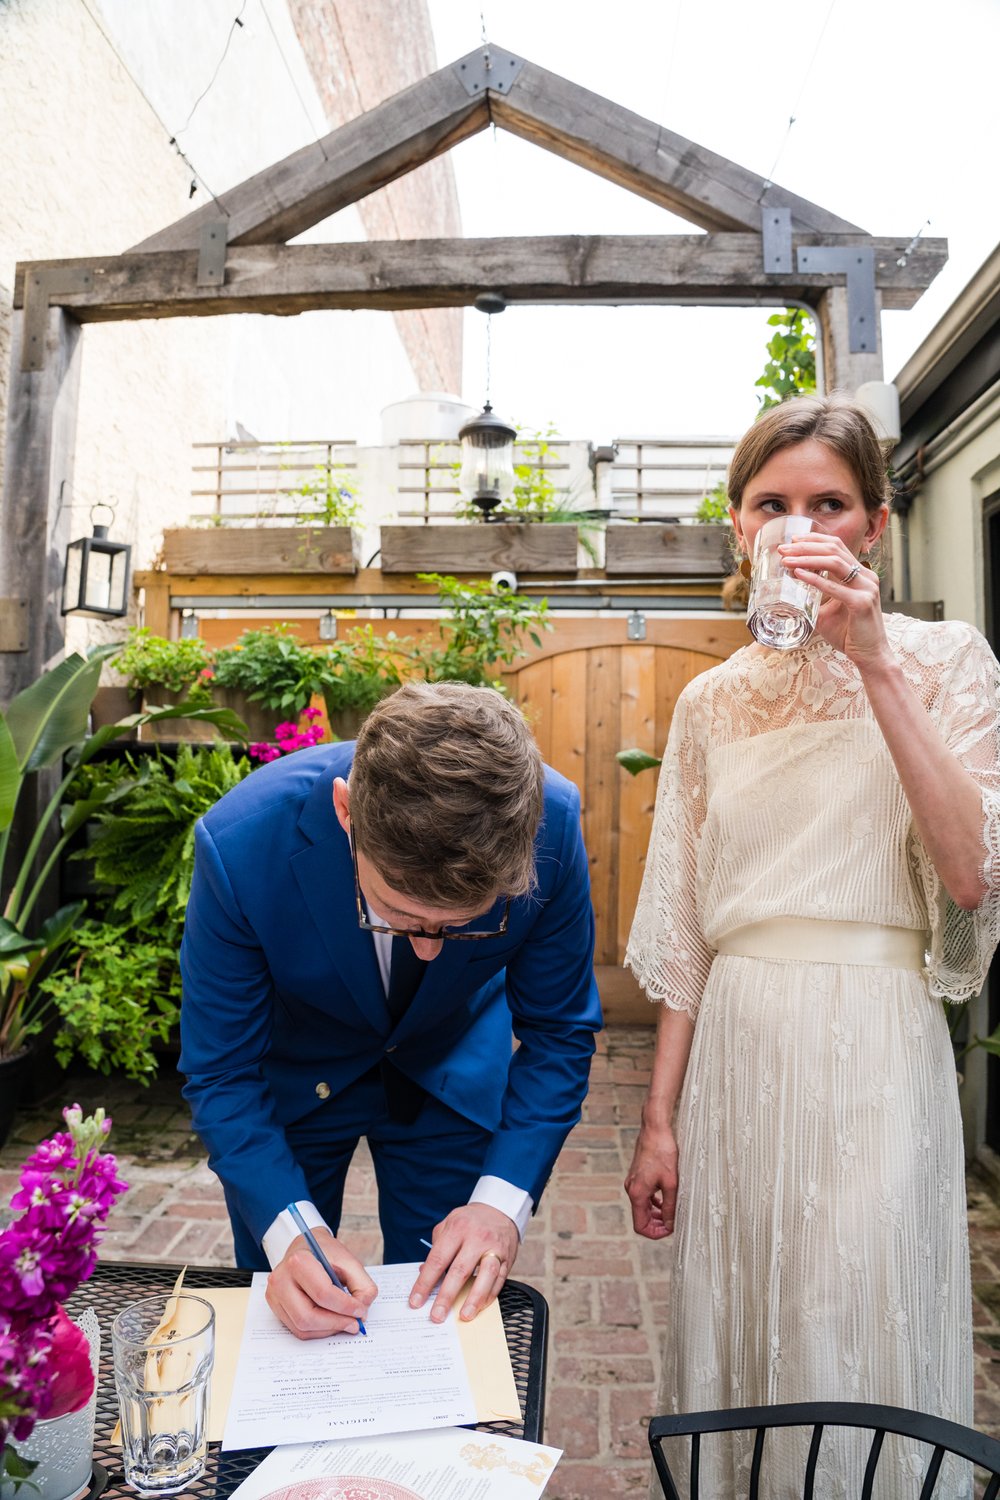 Bride takes a drink as groom signs wedding license, Philadelphia wedding documentary